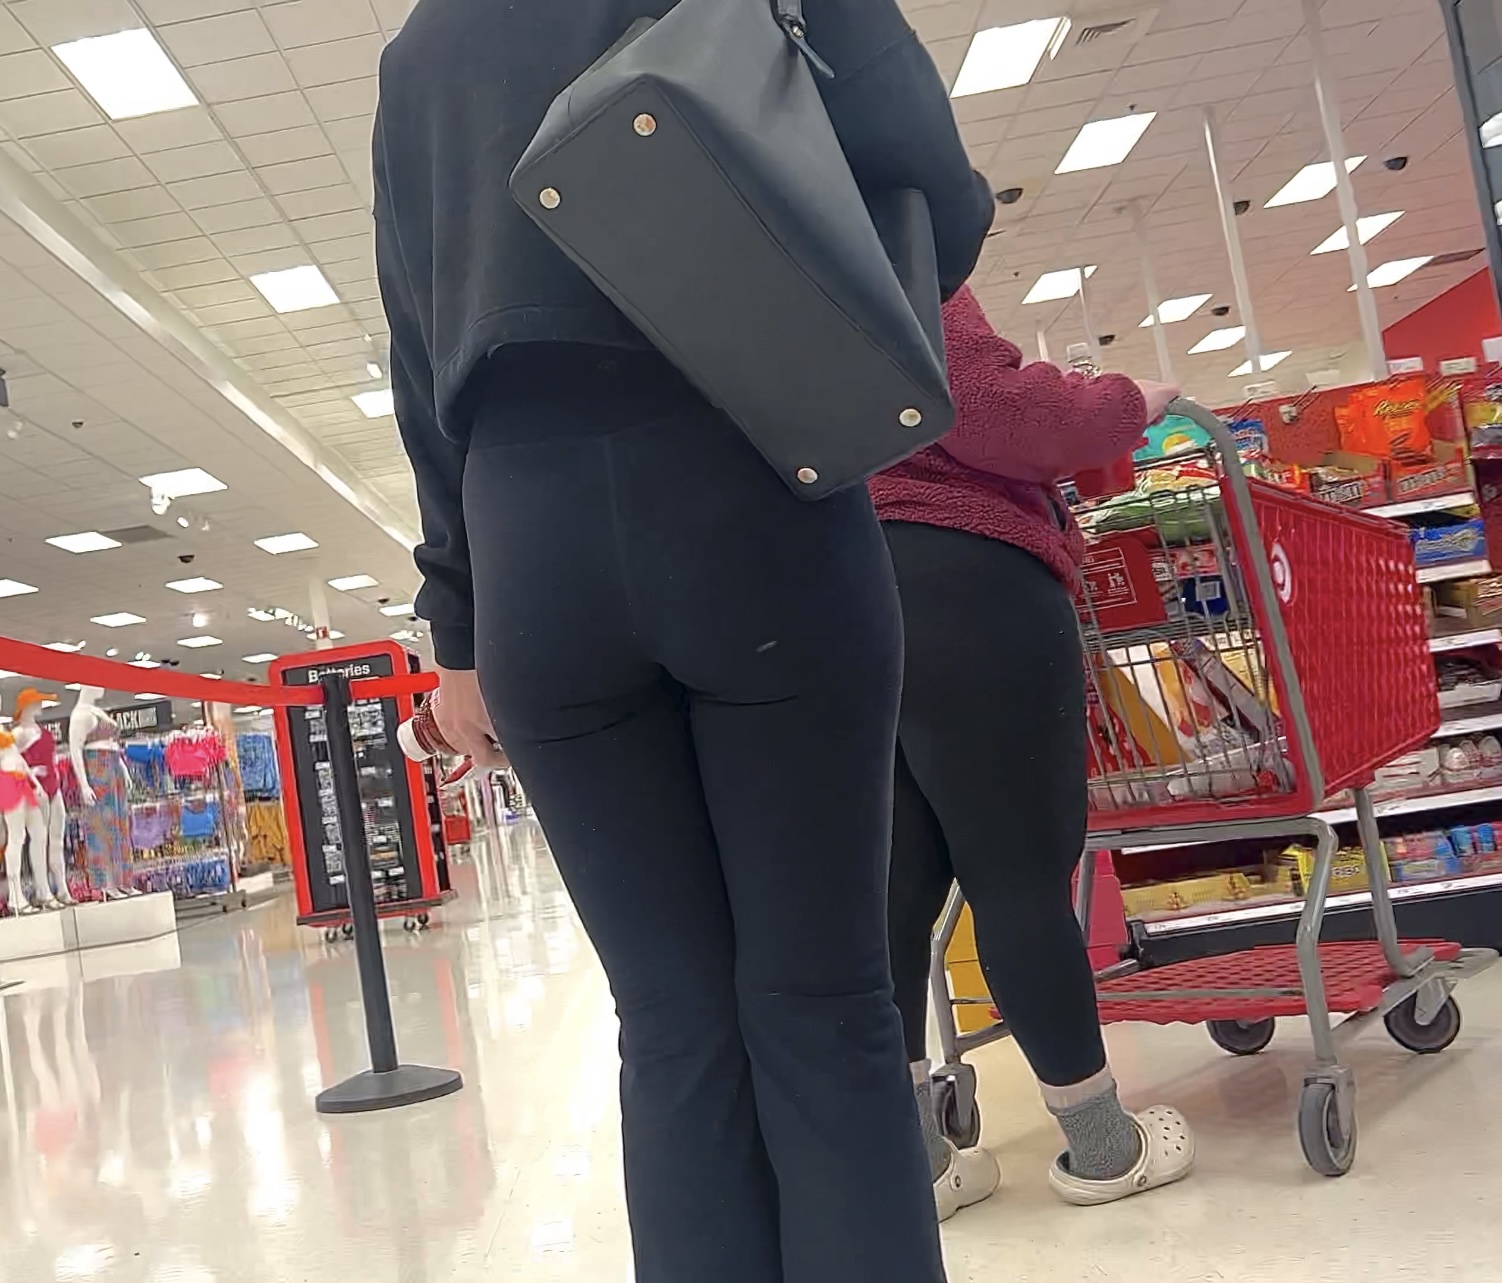 Cute butt in black spandex - Spandex, Leggings & Yoga Pants - Forum